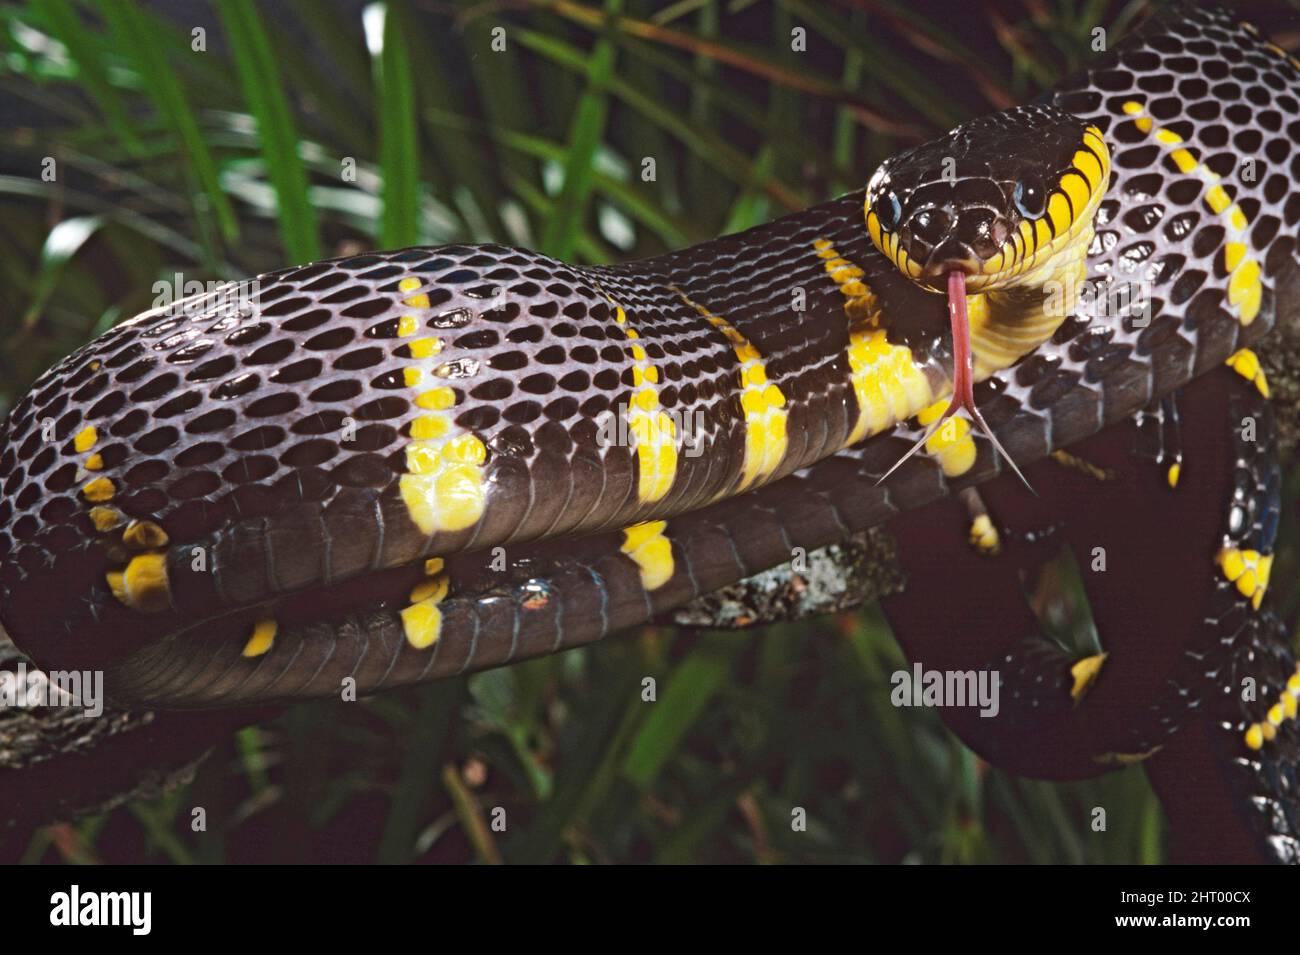 Gold-ringed cat snake (Boiga dendrophila), with tongue flicking, rear fanged and mildly venomous. Malay Peninsula Stock Photo